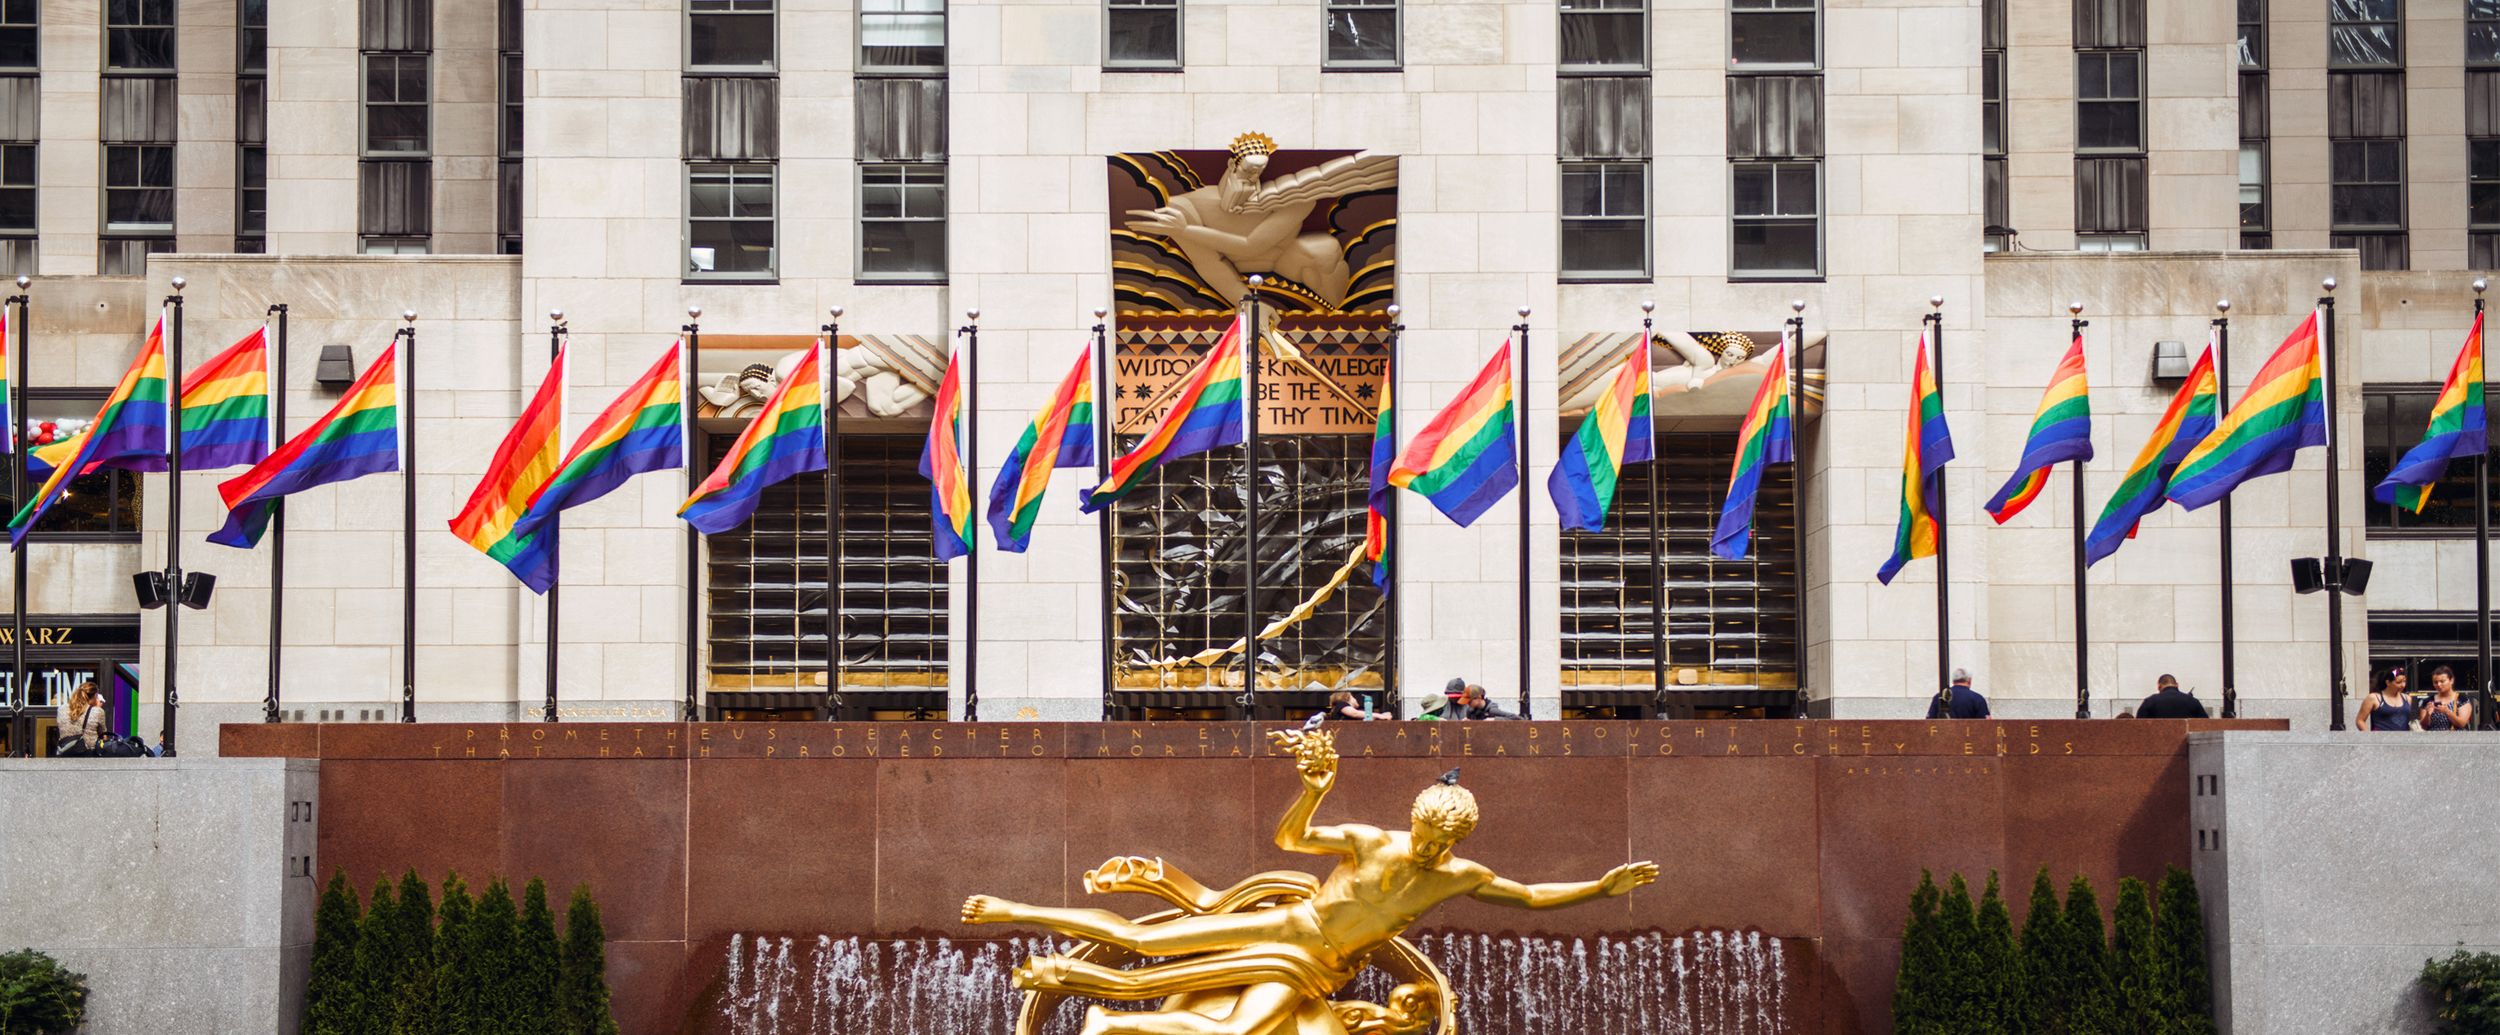 Rockefeller Center celebrates pride. Rainbow flags and Prometheus